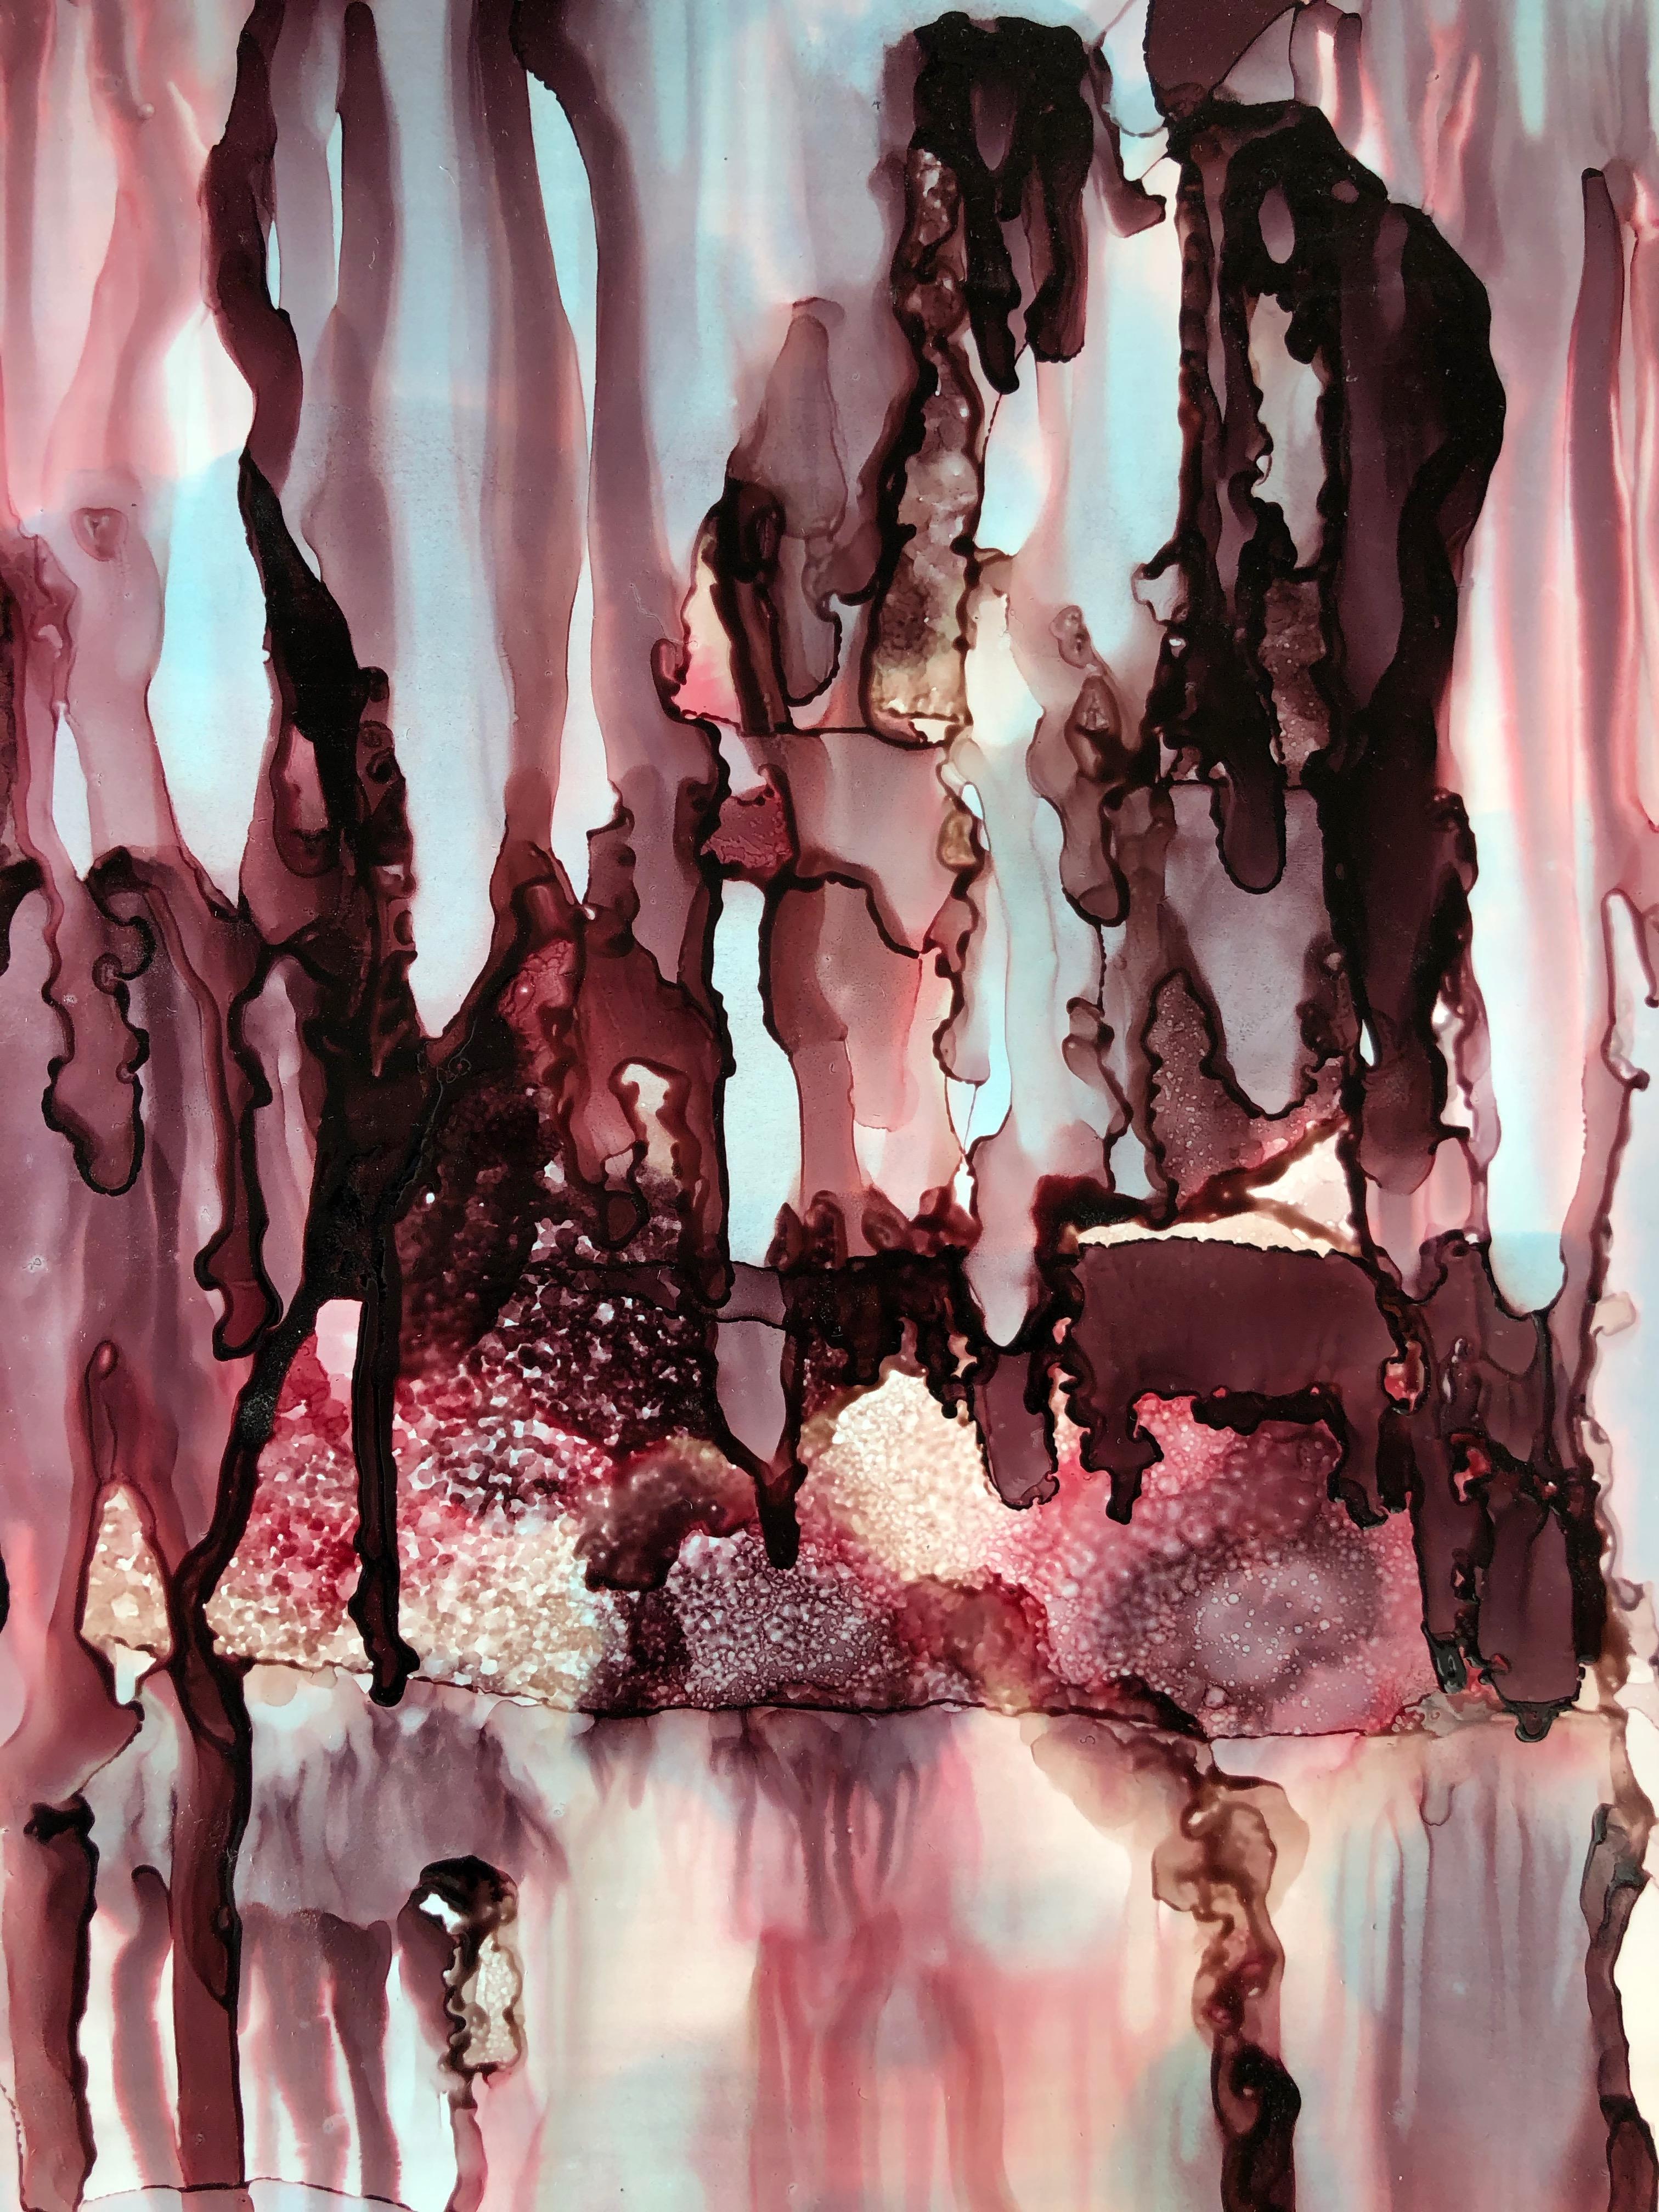 Colorfall III-Abstraktionskunst, in Granatrot, Hellblau, Auberginefarbe gefertigt (Abstrakter Expressionismus), Art, von Mila Akopova